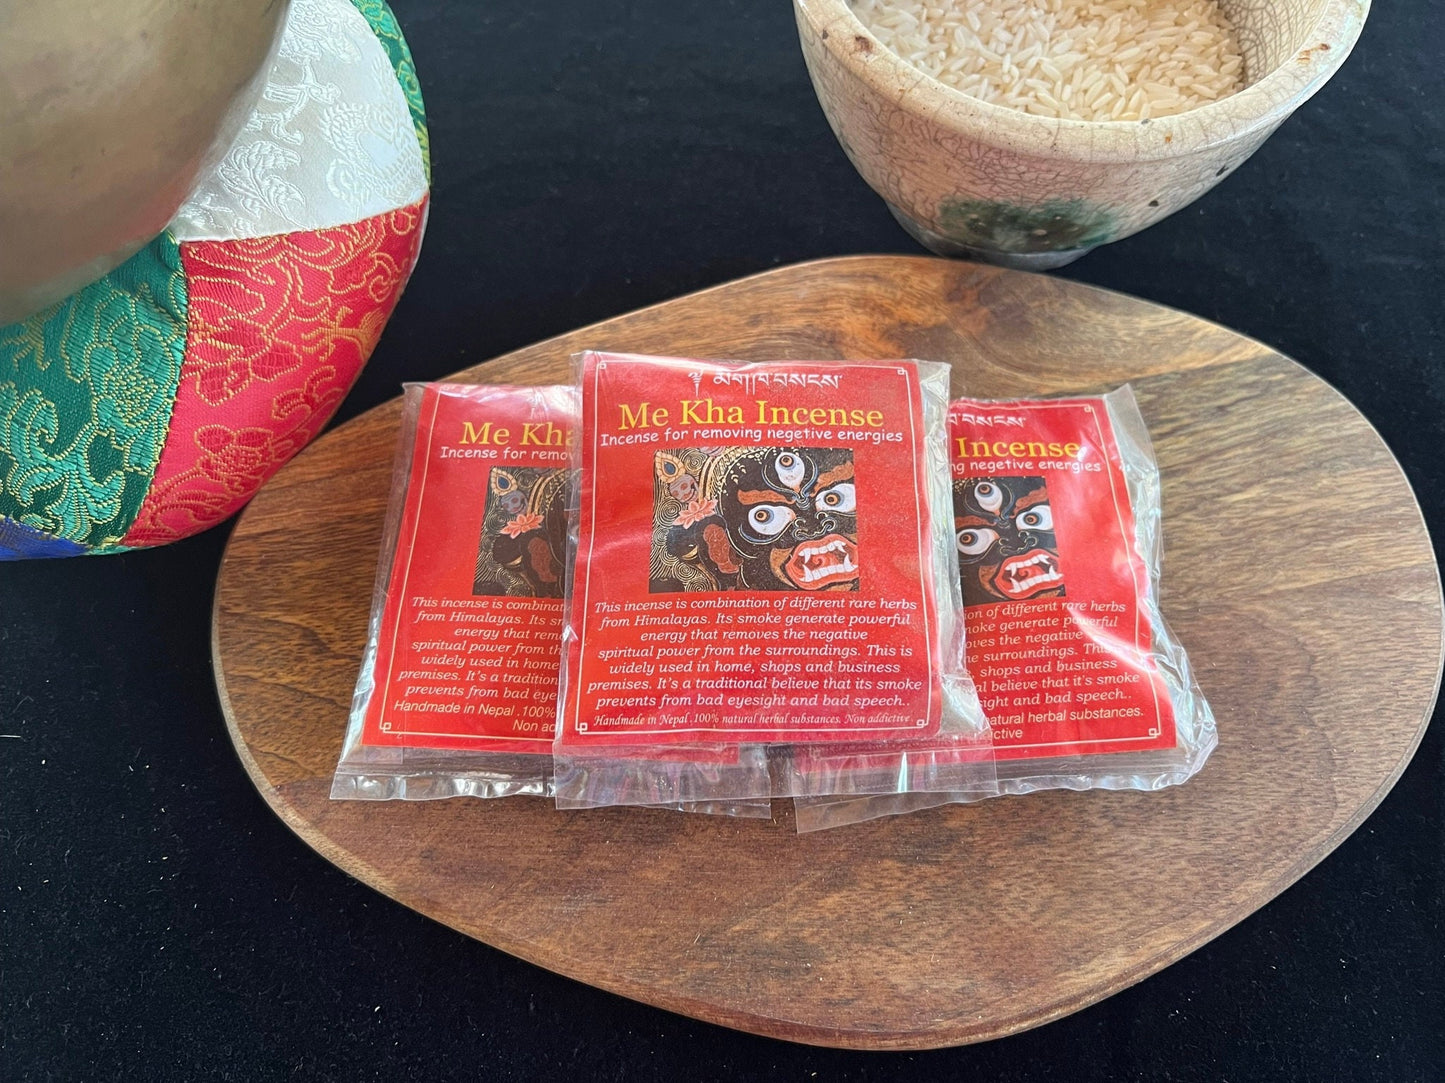 Me Kha Incense Powder| Tibetan Incense | 35 grams | Incense for removing negative energies | Ward off Misfortune | Mikha Dadok